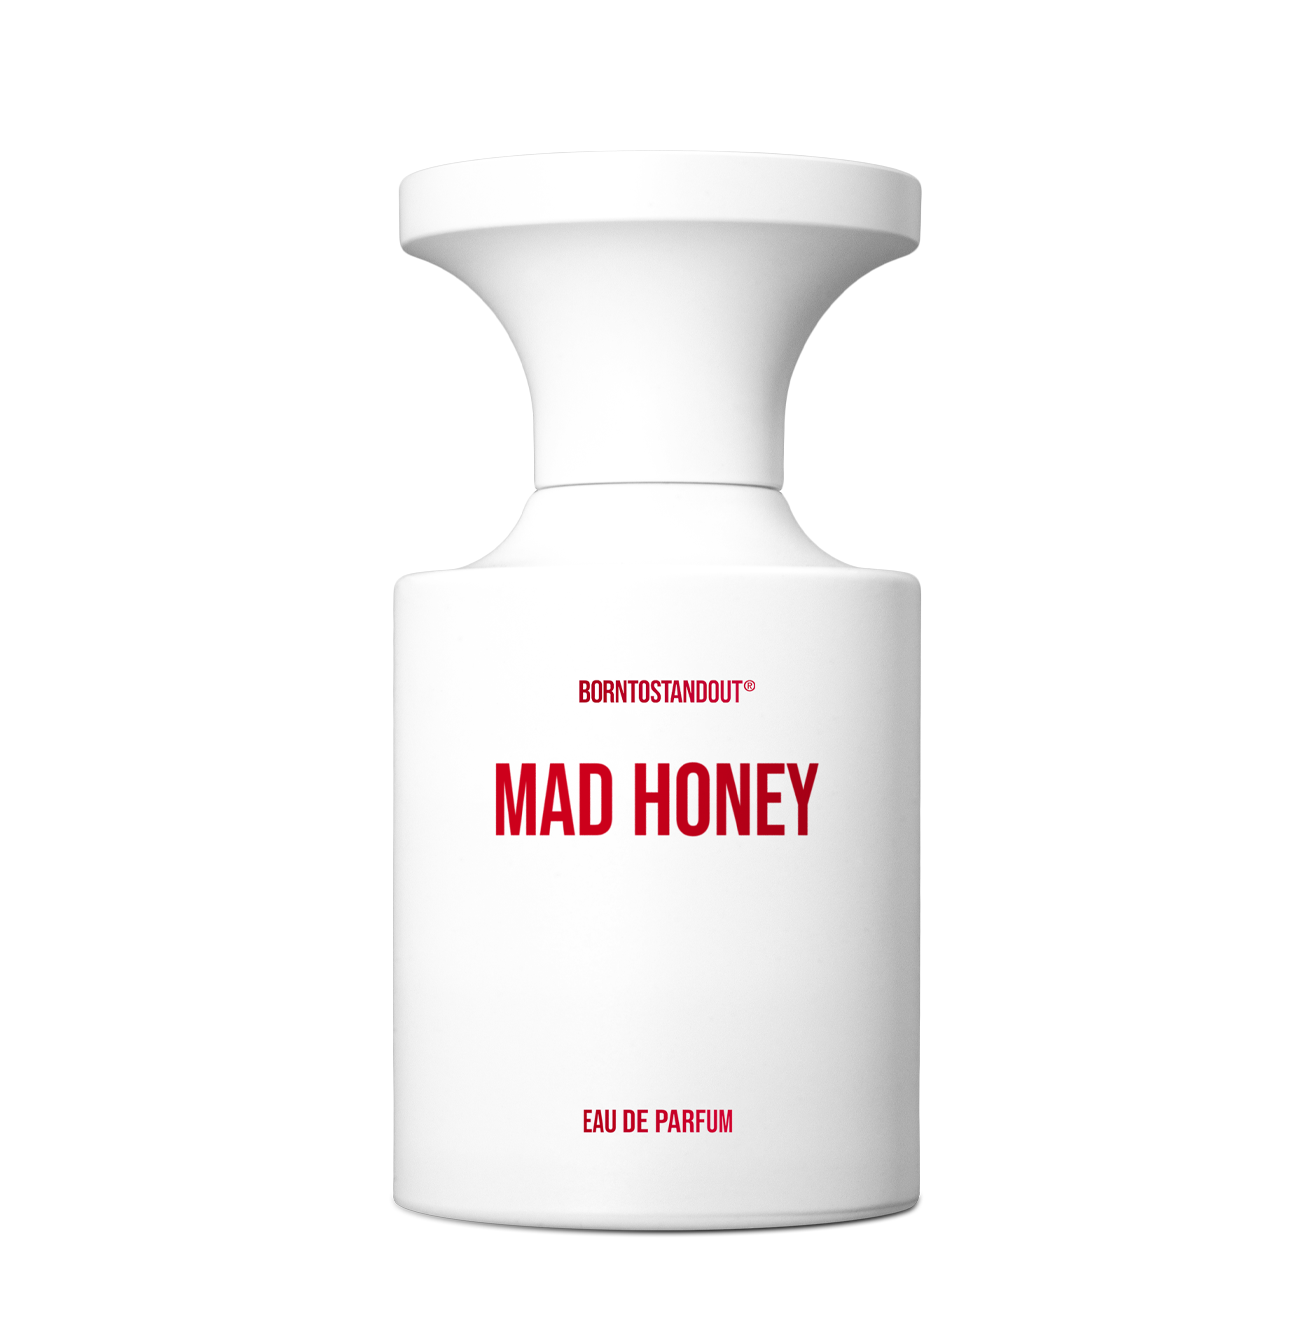 BORNTOSTANDOUT mad honey